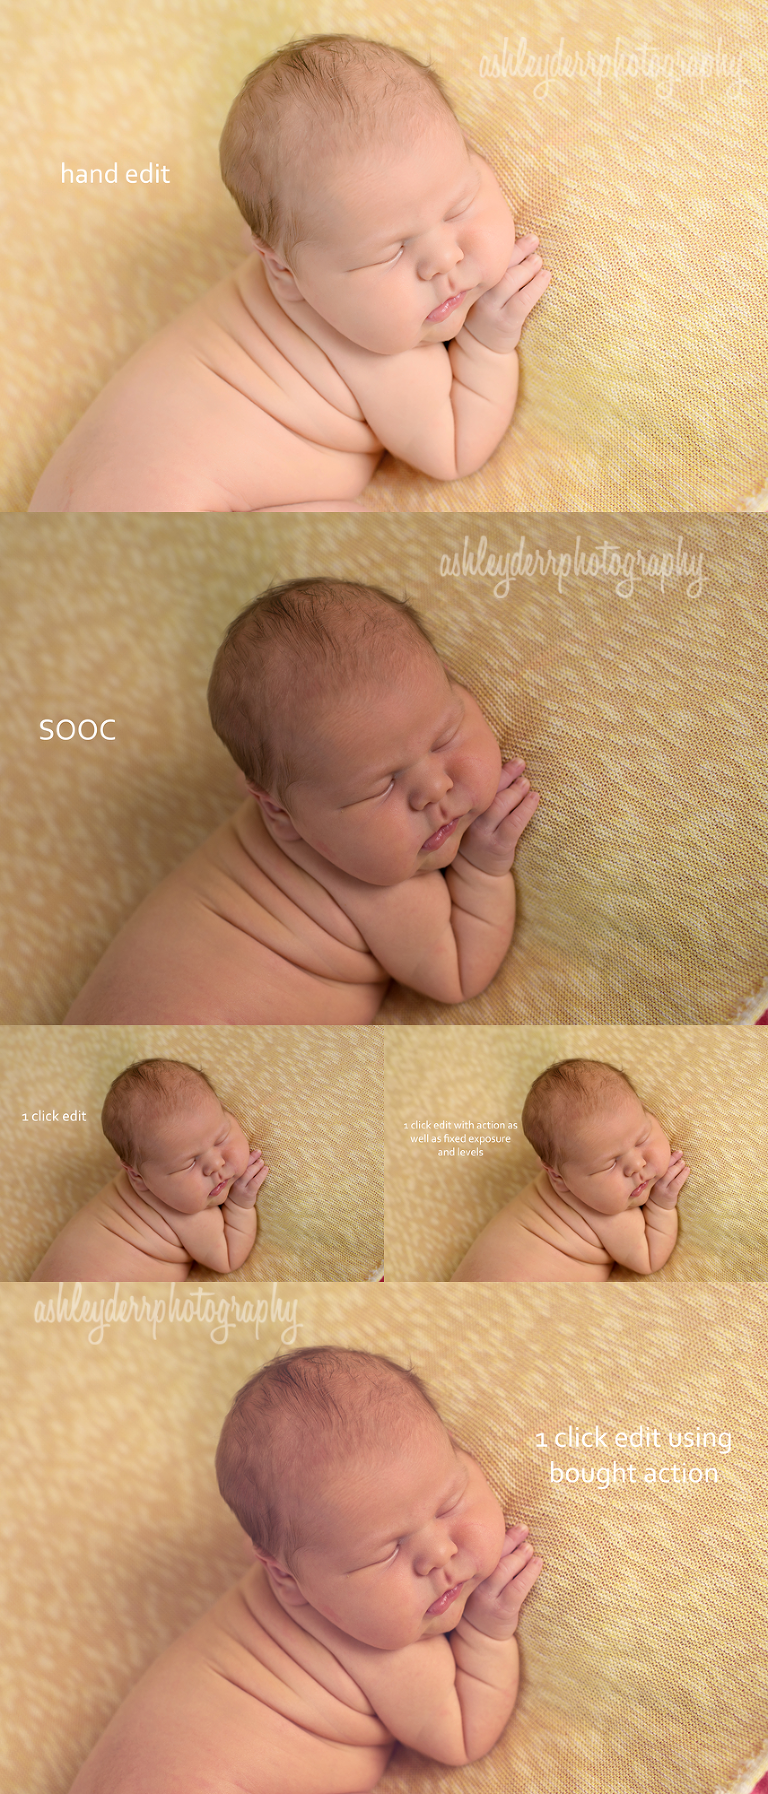 newborn hand editing versus store bought actions pittsburgh photographer